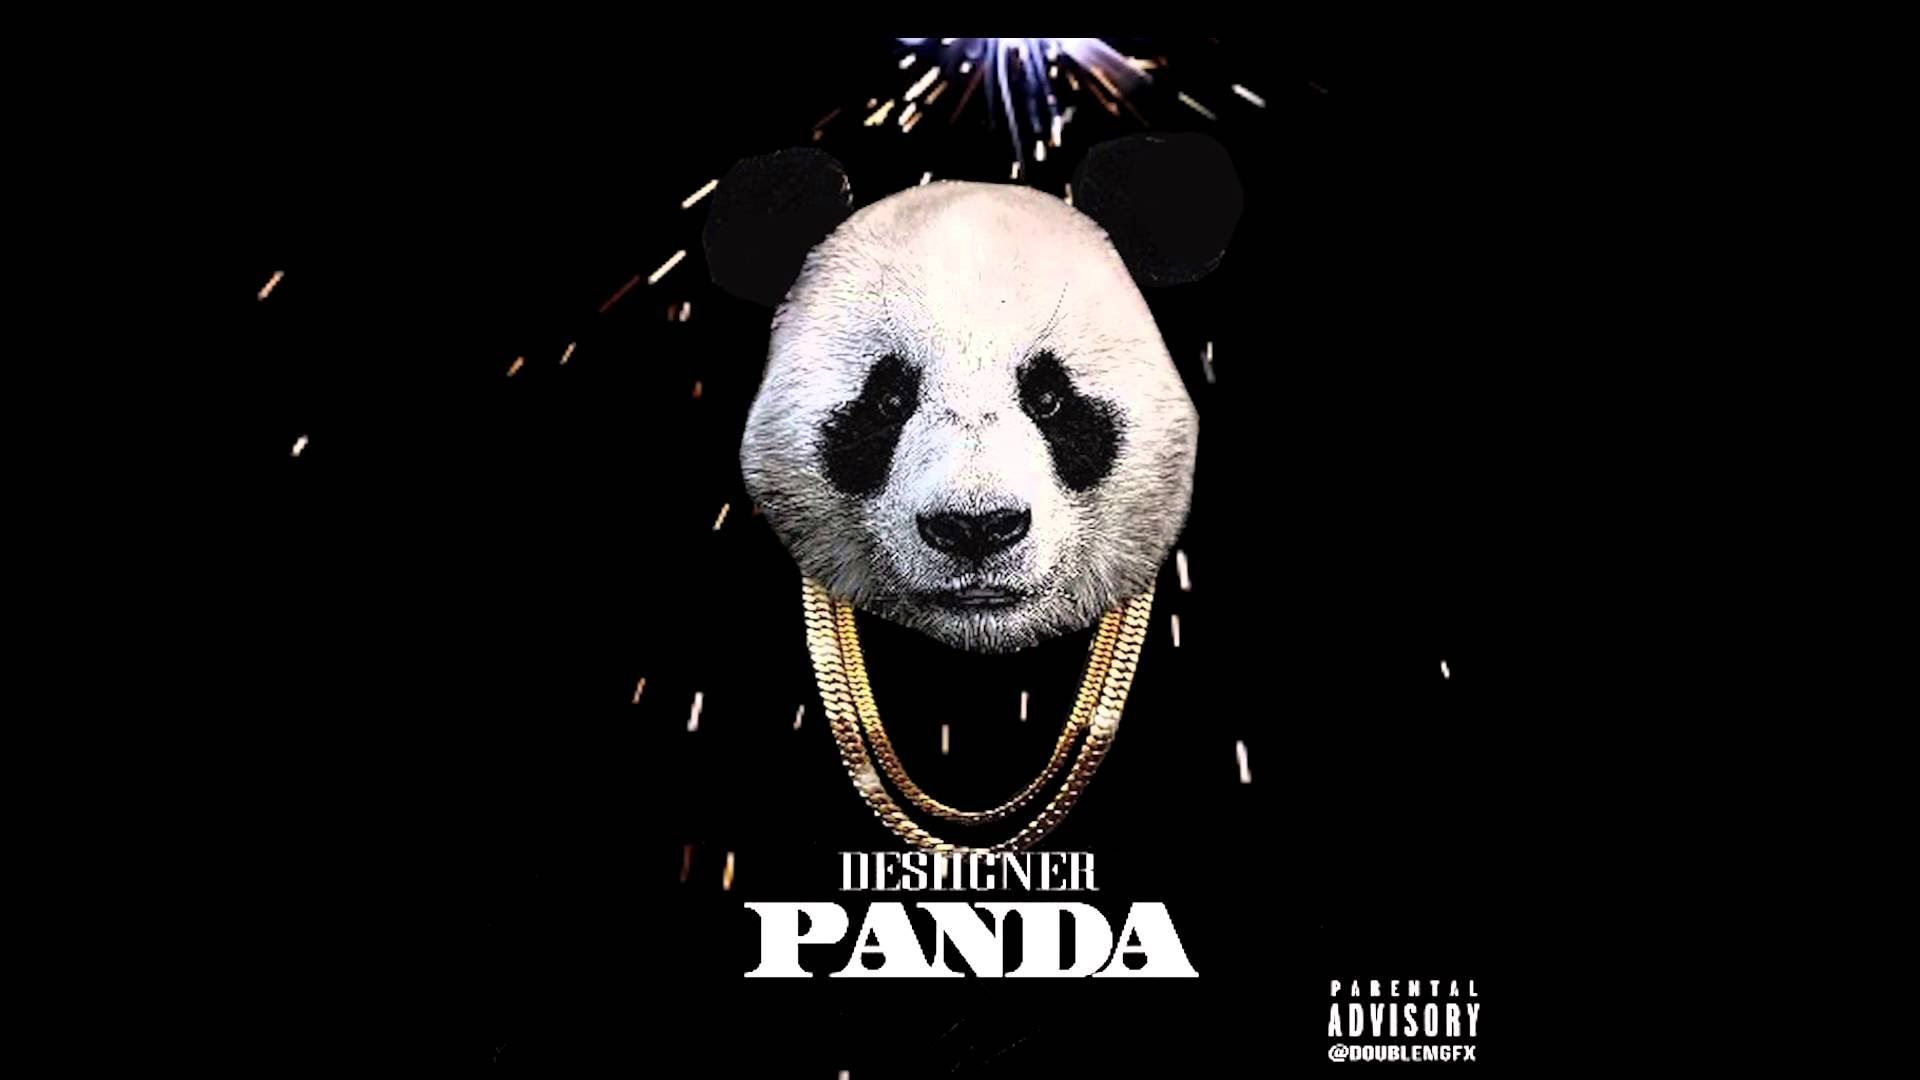 panda song mp3 download